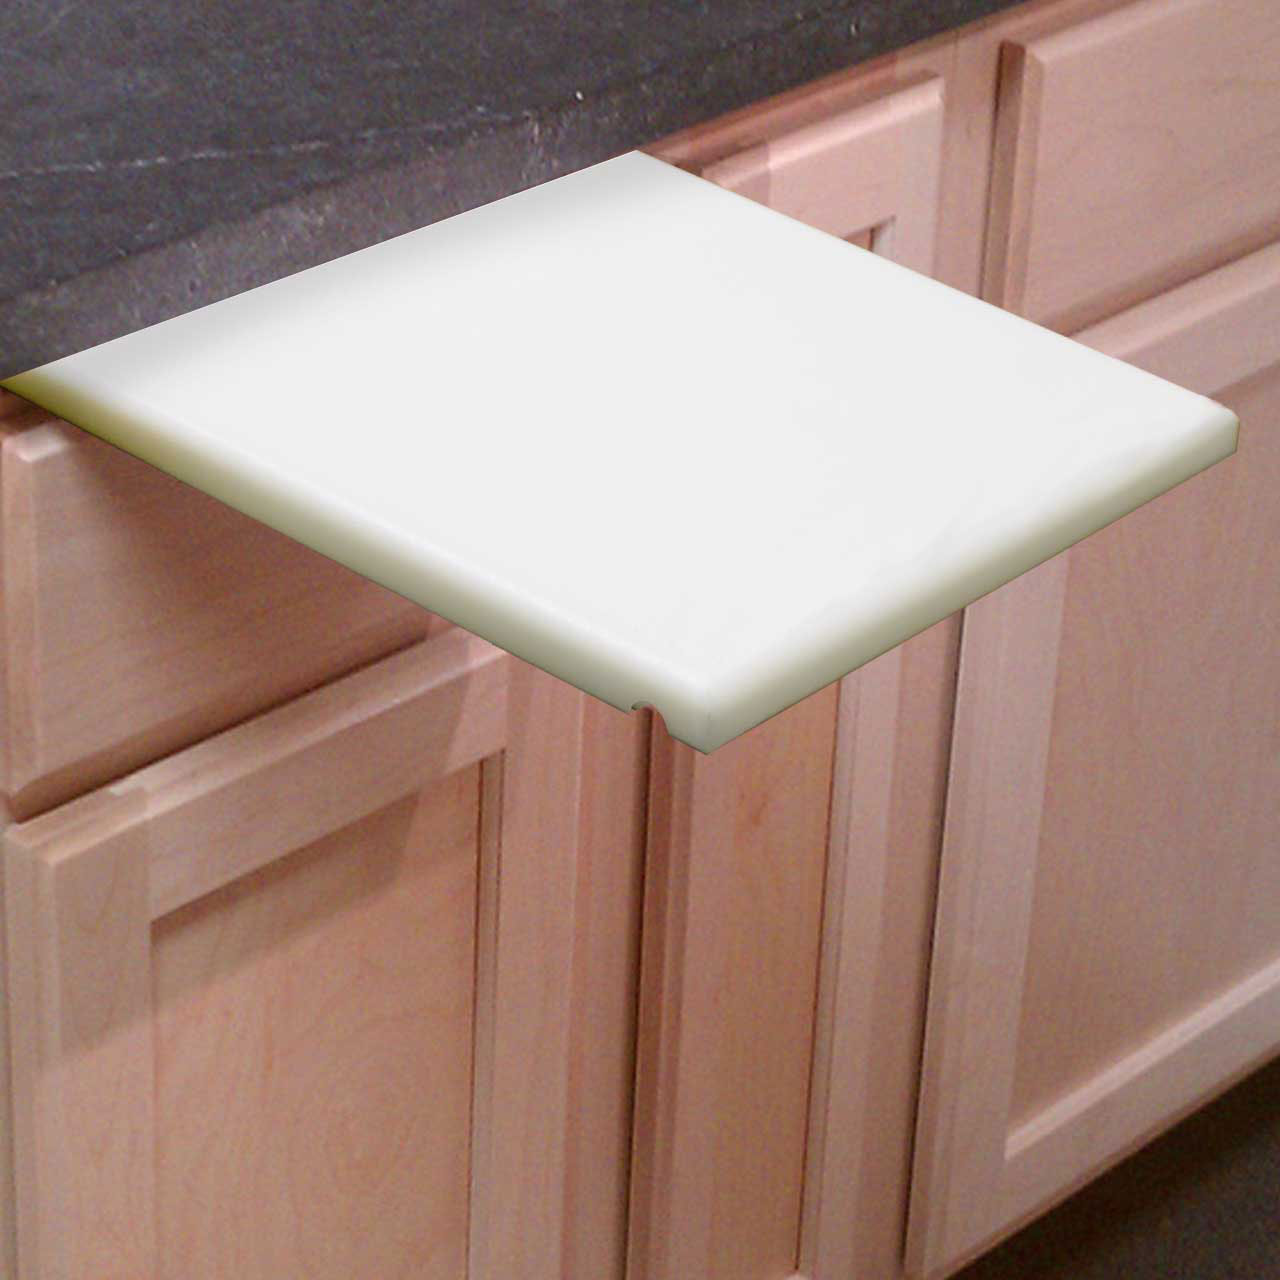  3/4 White Poly Cutting Board - A Cut Above